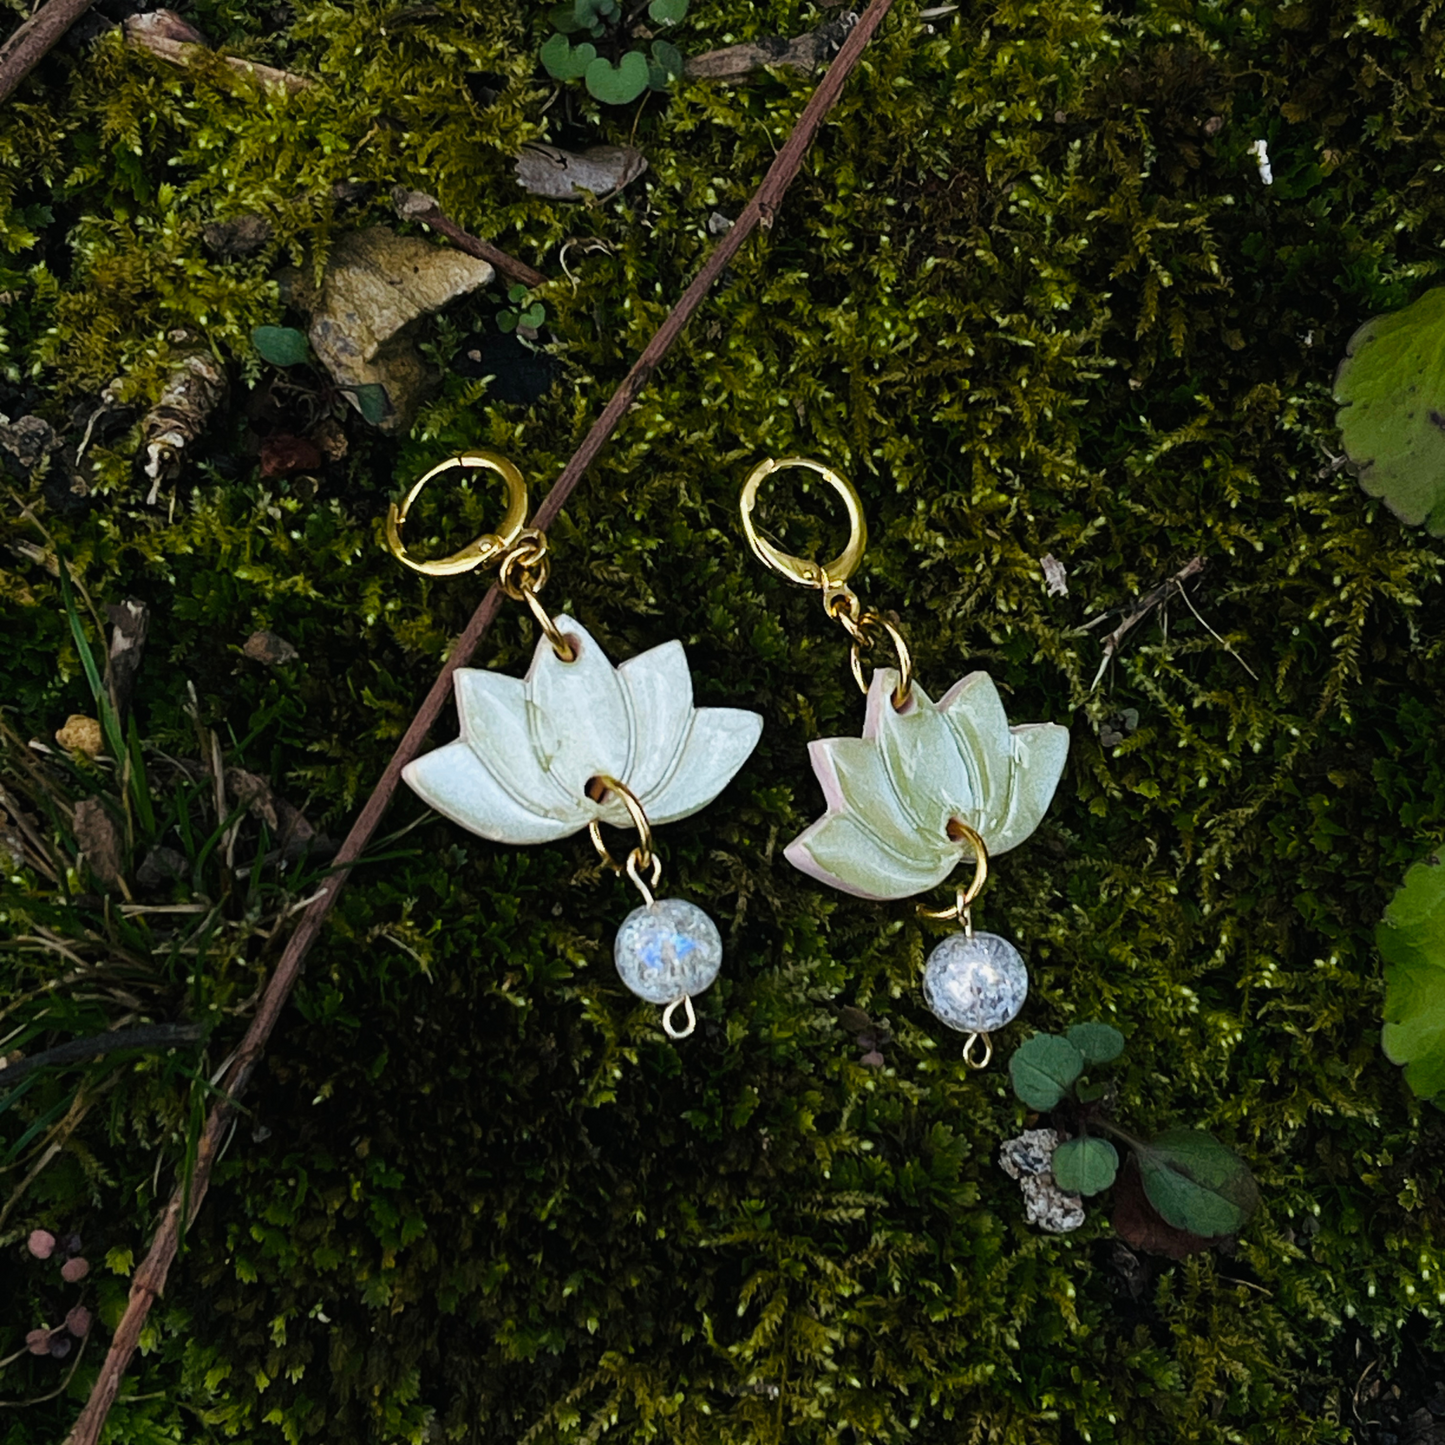 The Green Lotus Earrings